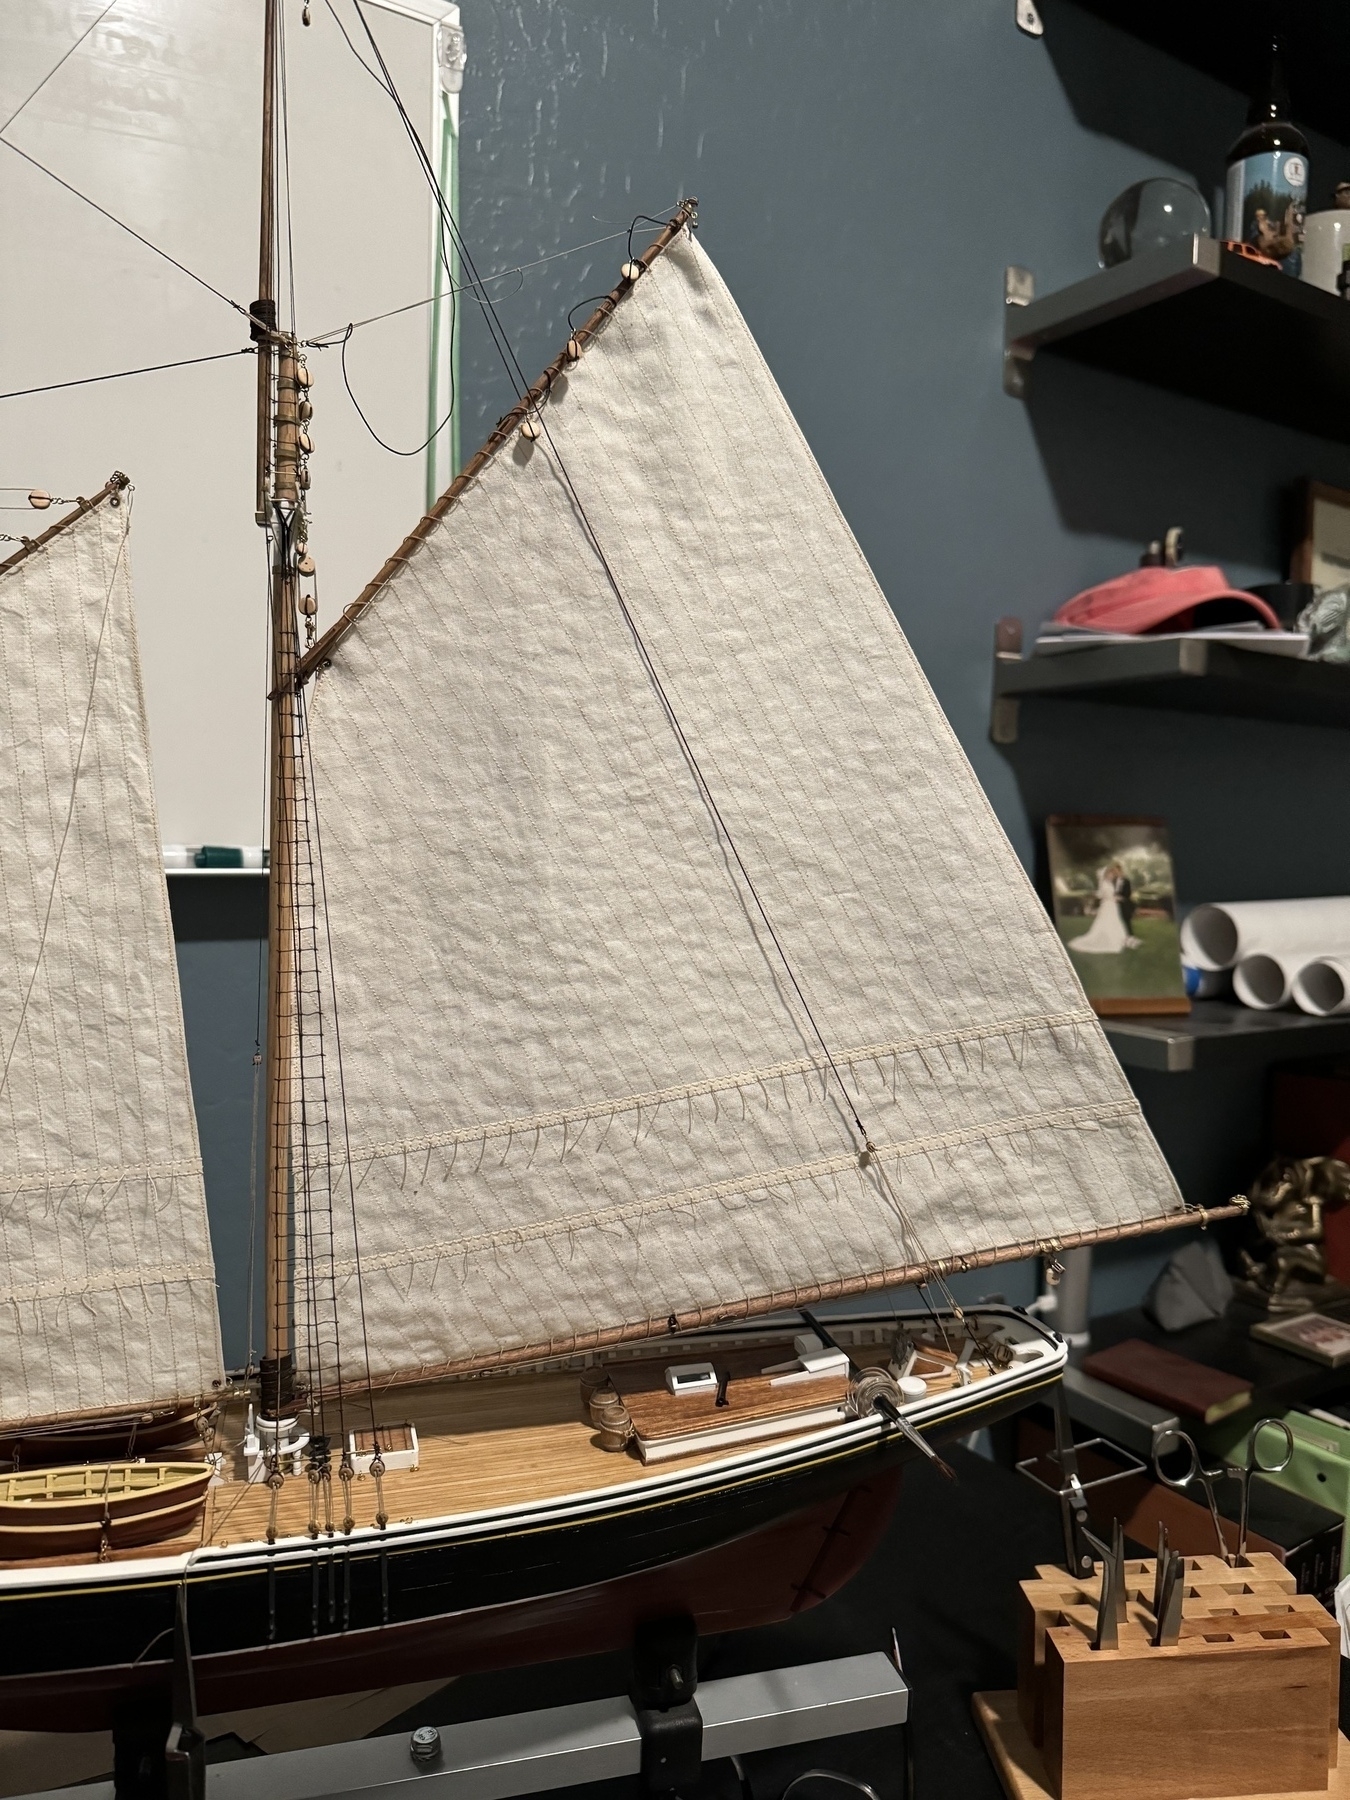 Main sail on Bluenose model. 